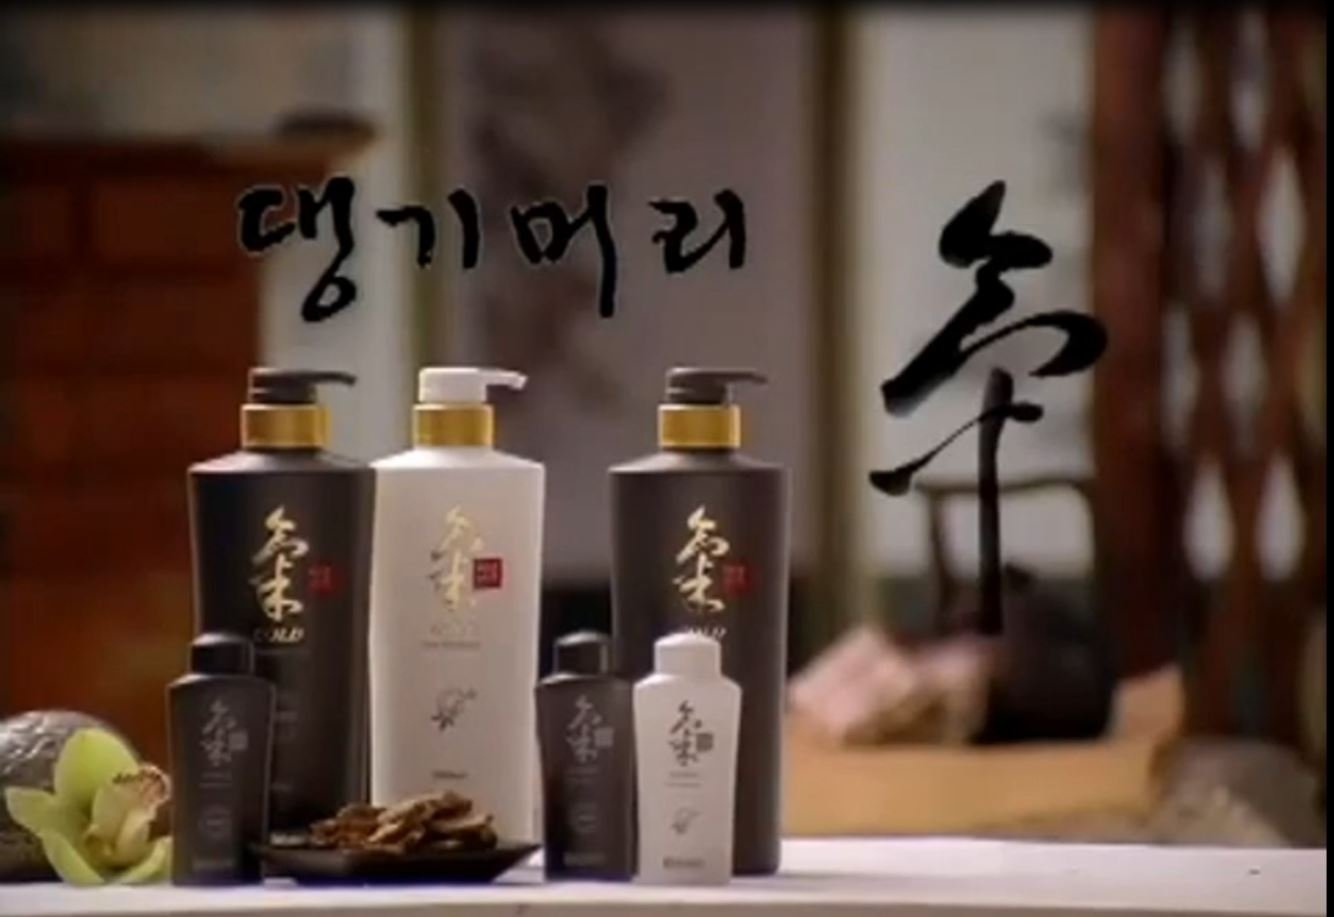 DaengGiMeoRi Shampoo - Шампуни Тэнги Мори из Южной Кореи - сила и красота Ваших волос